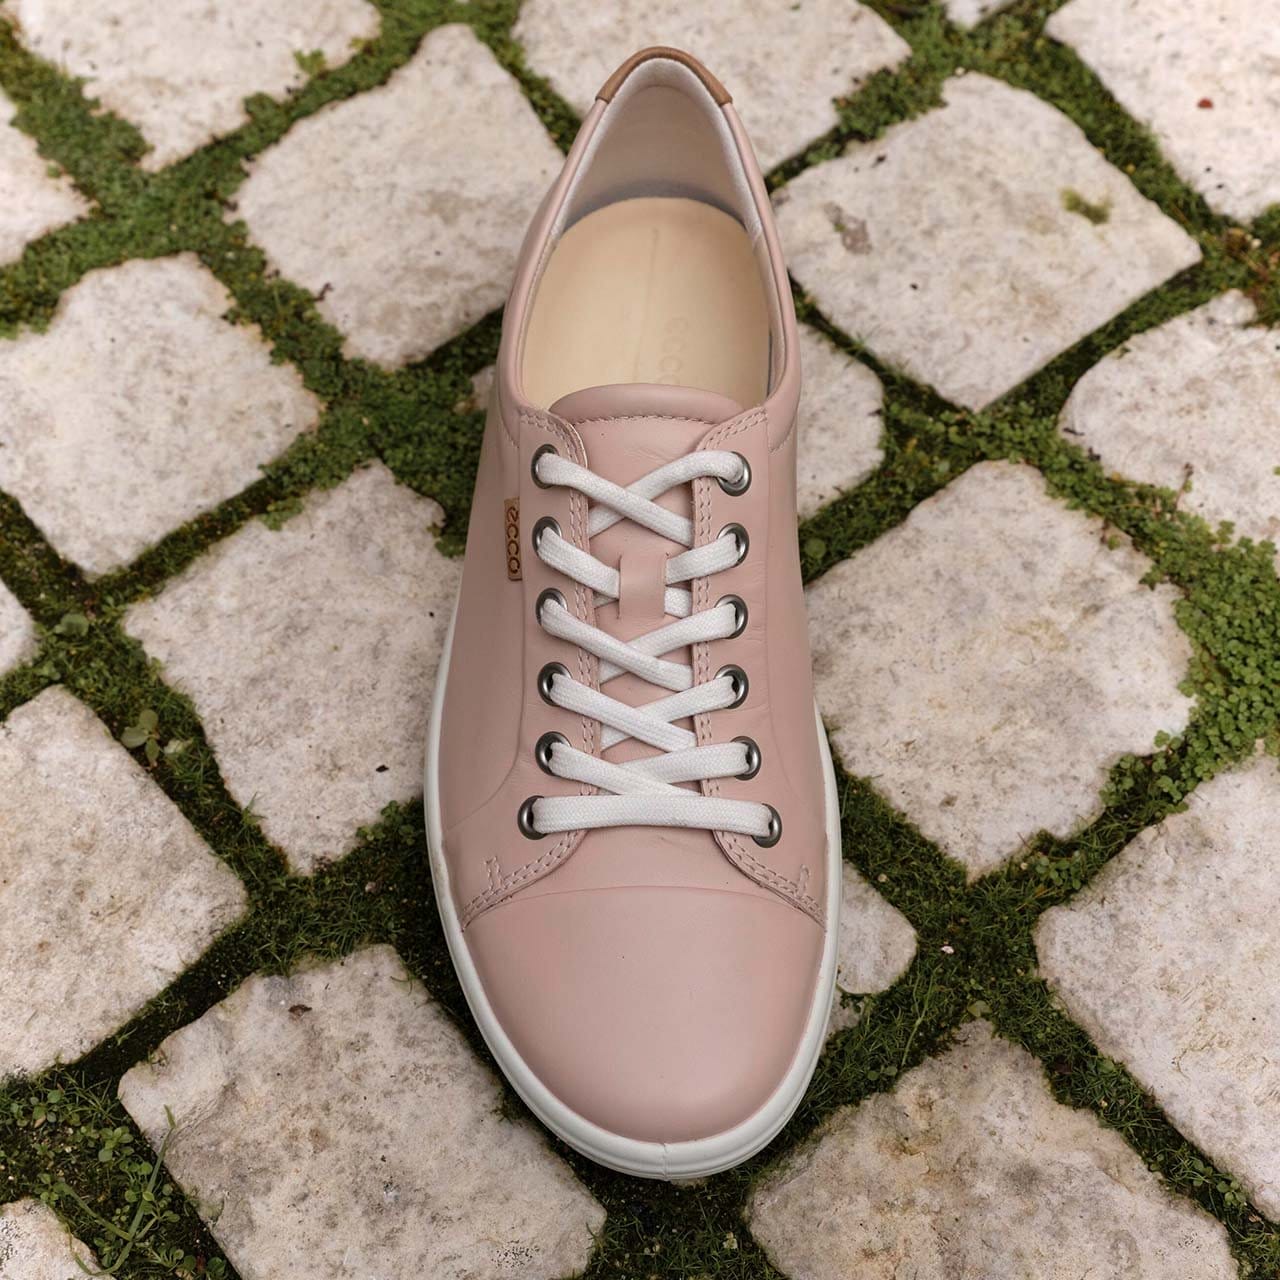 Pink SOFT 7 sneaker on stone walkway